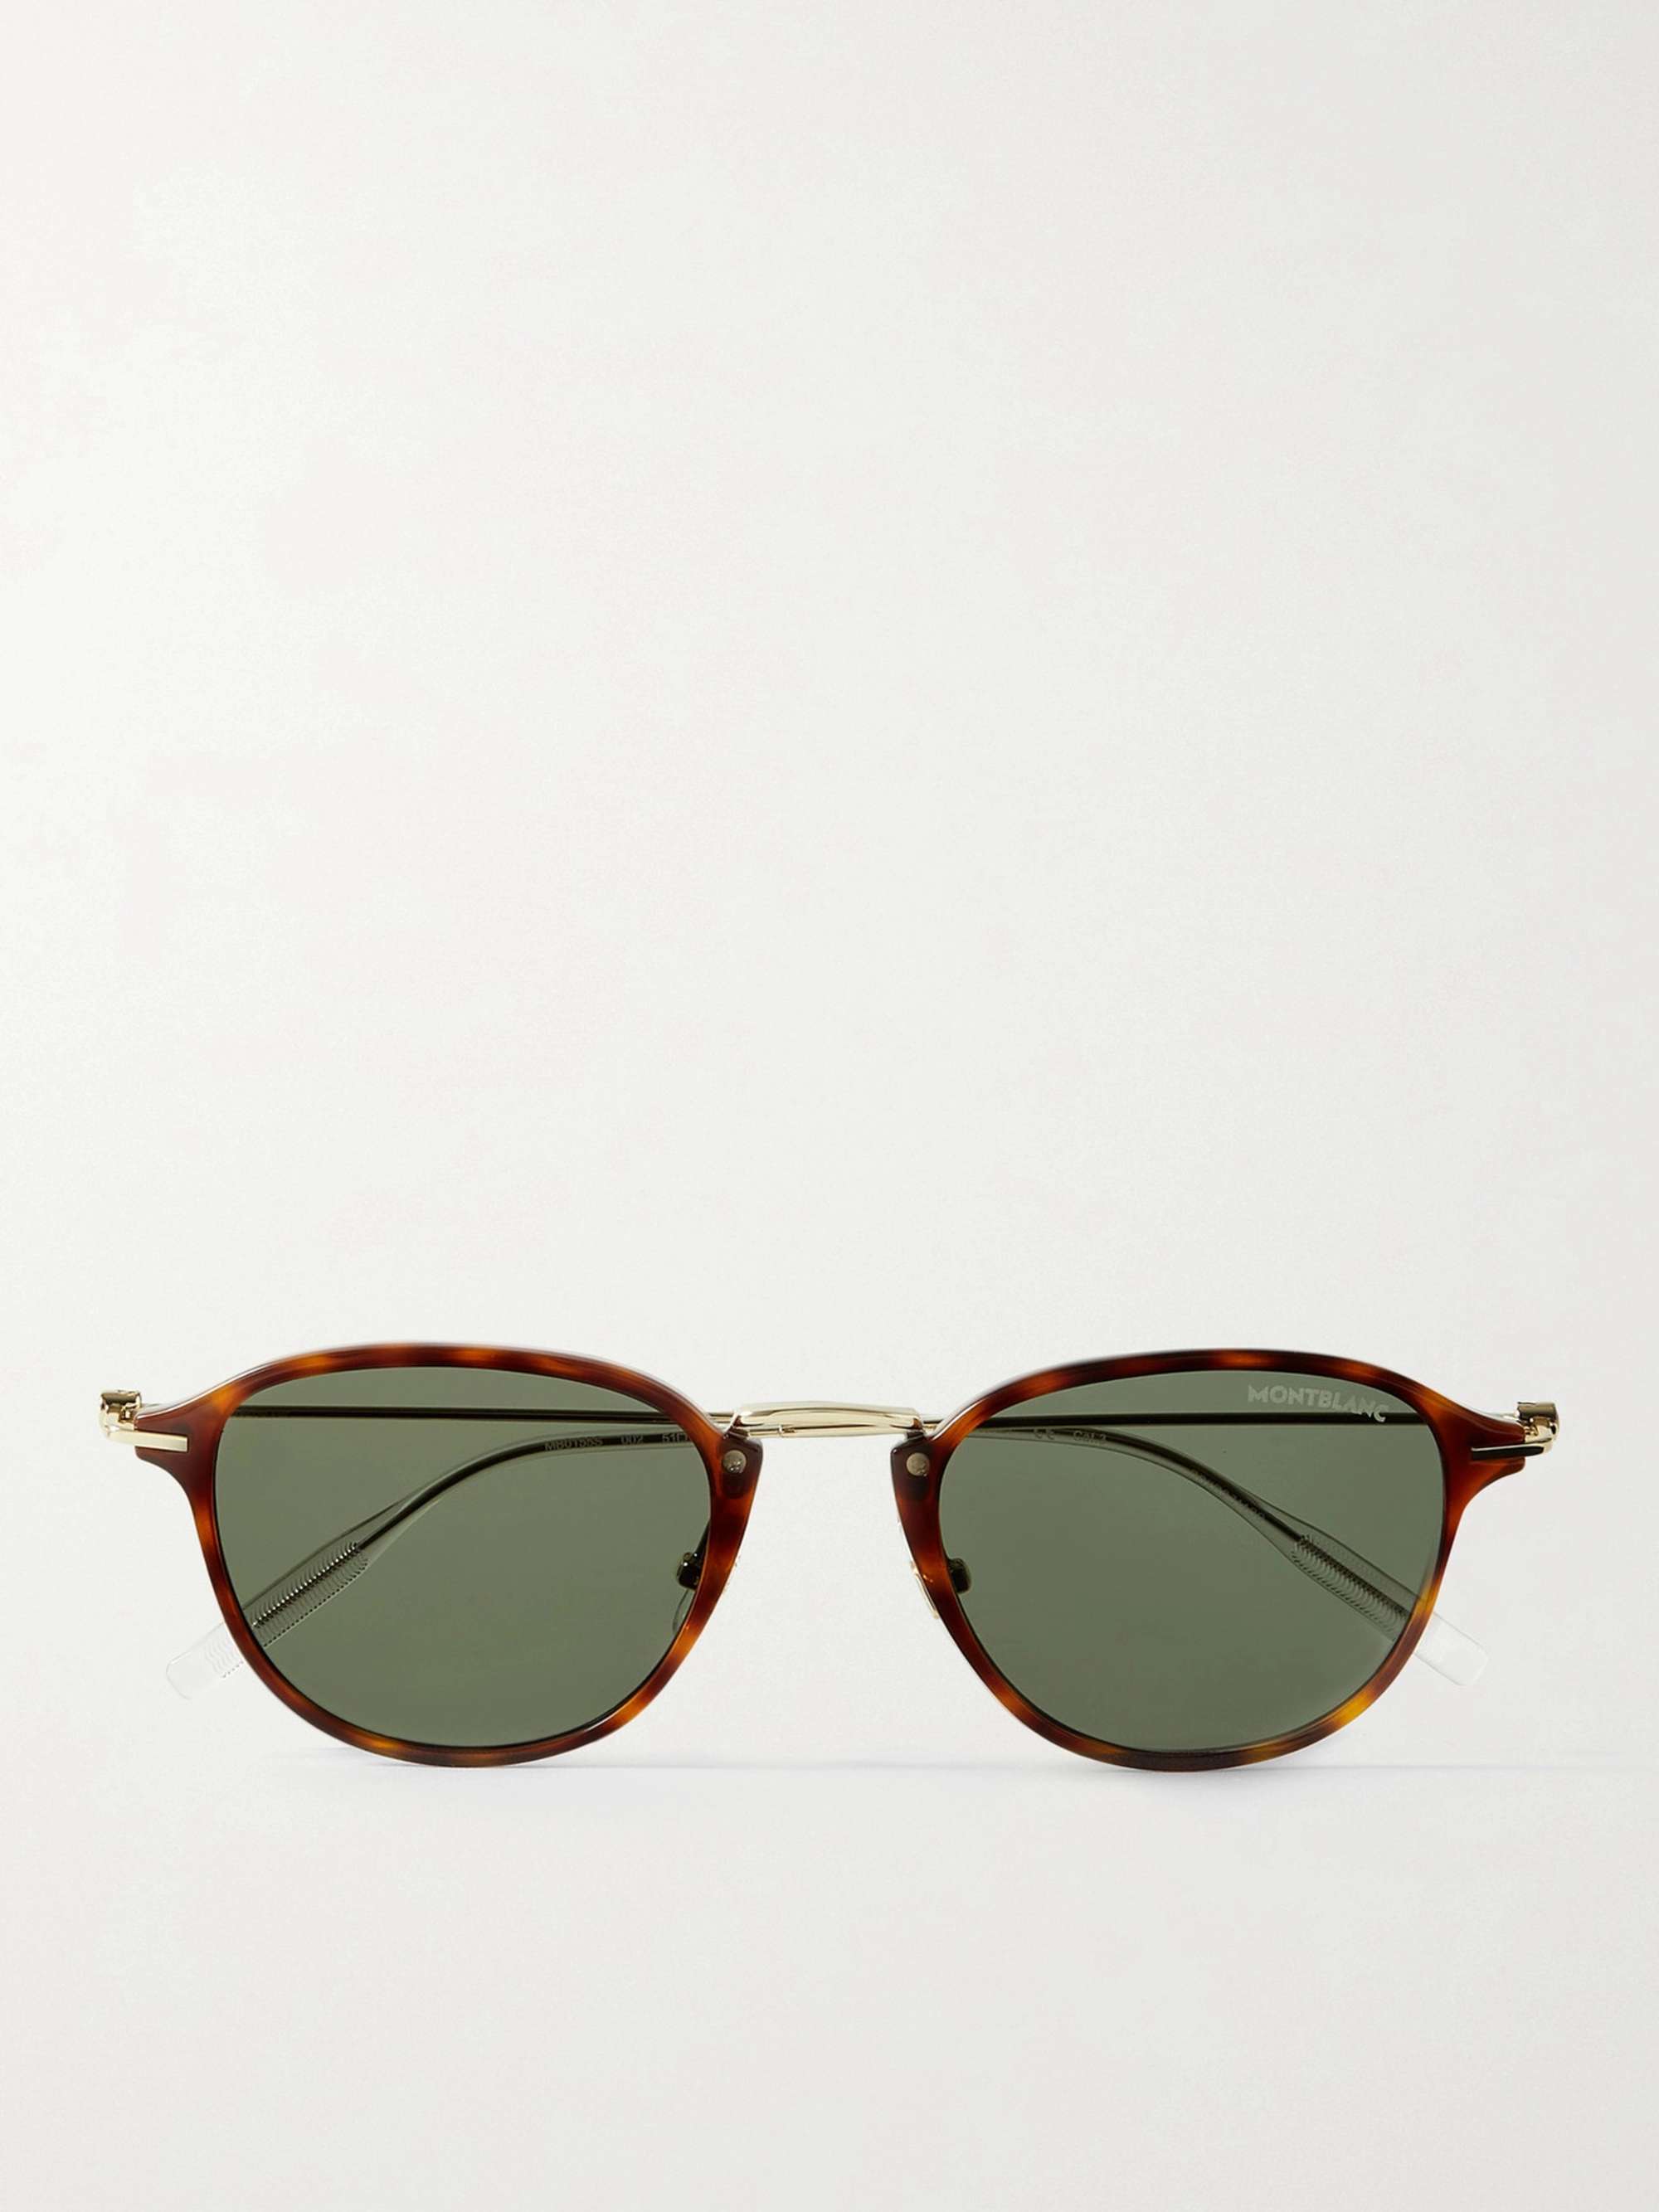 MONTBLANC Round-Frame Tortoiseshell Acetate and Gold-Tone Sunglasses